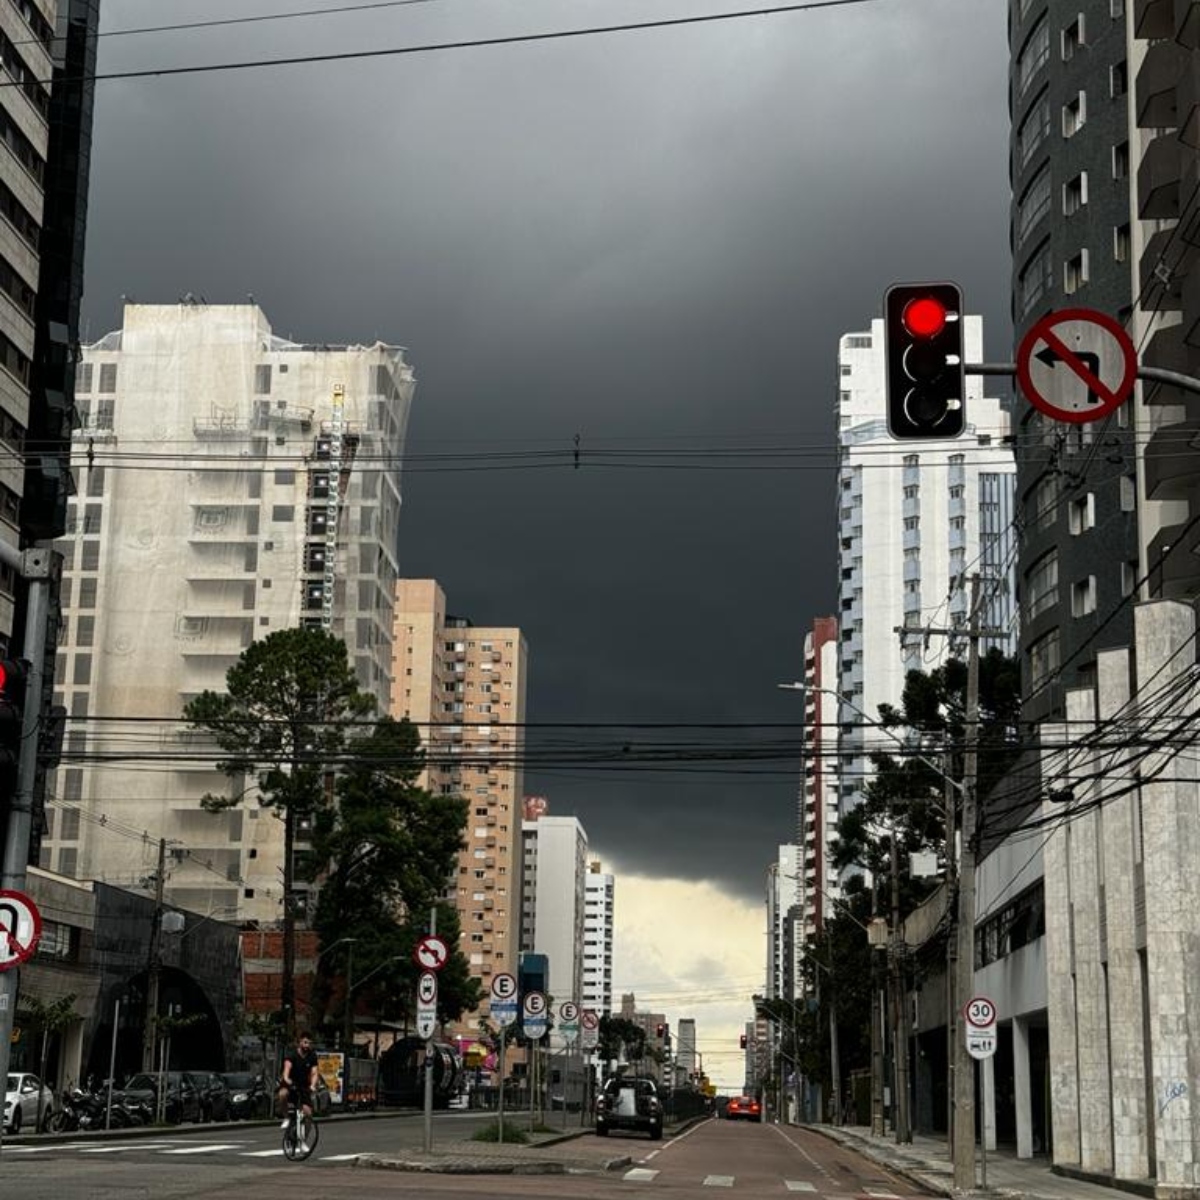  Alerta tempestades em Curitiba 